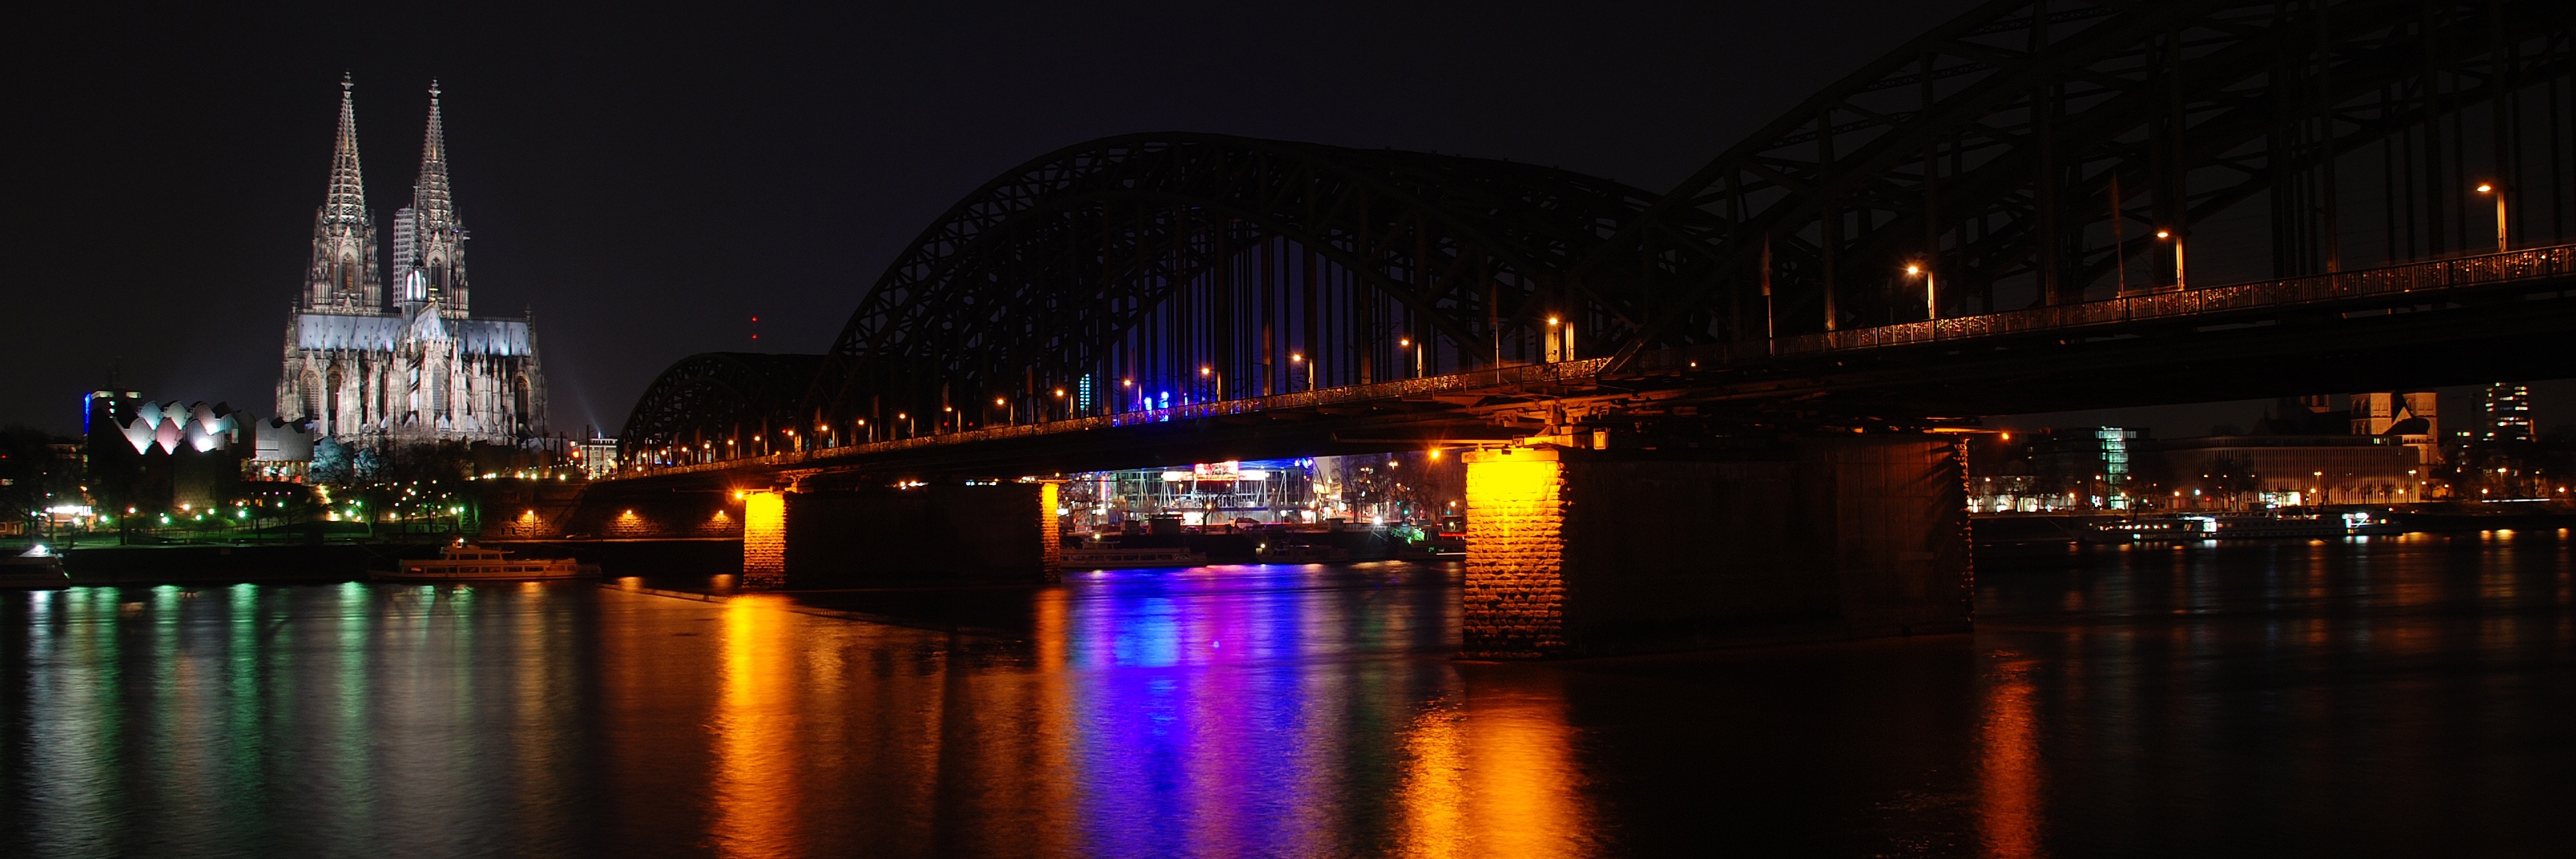 lighted concrete bridge